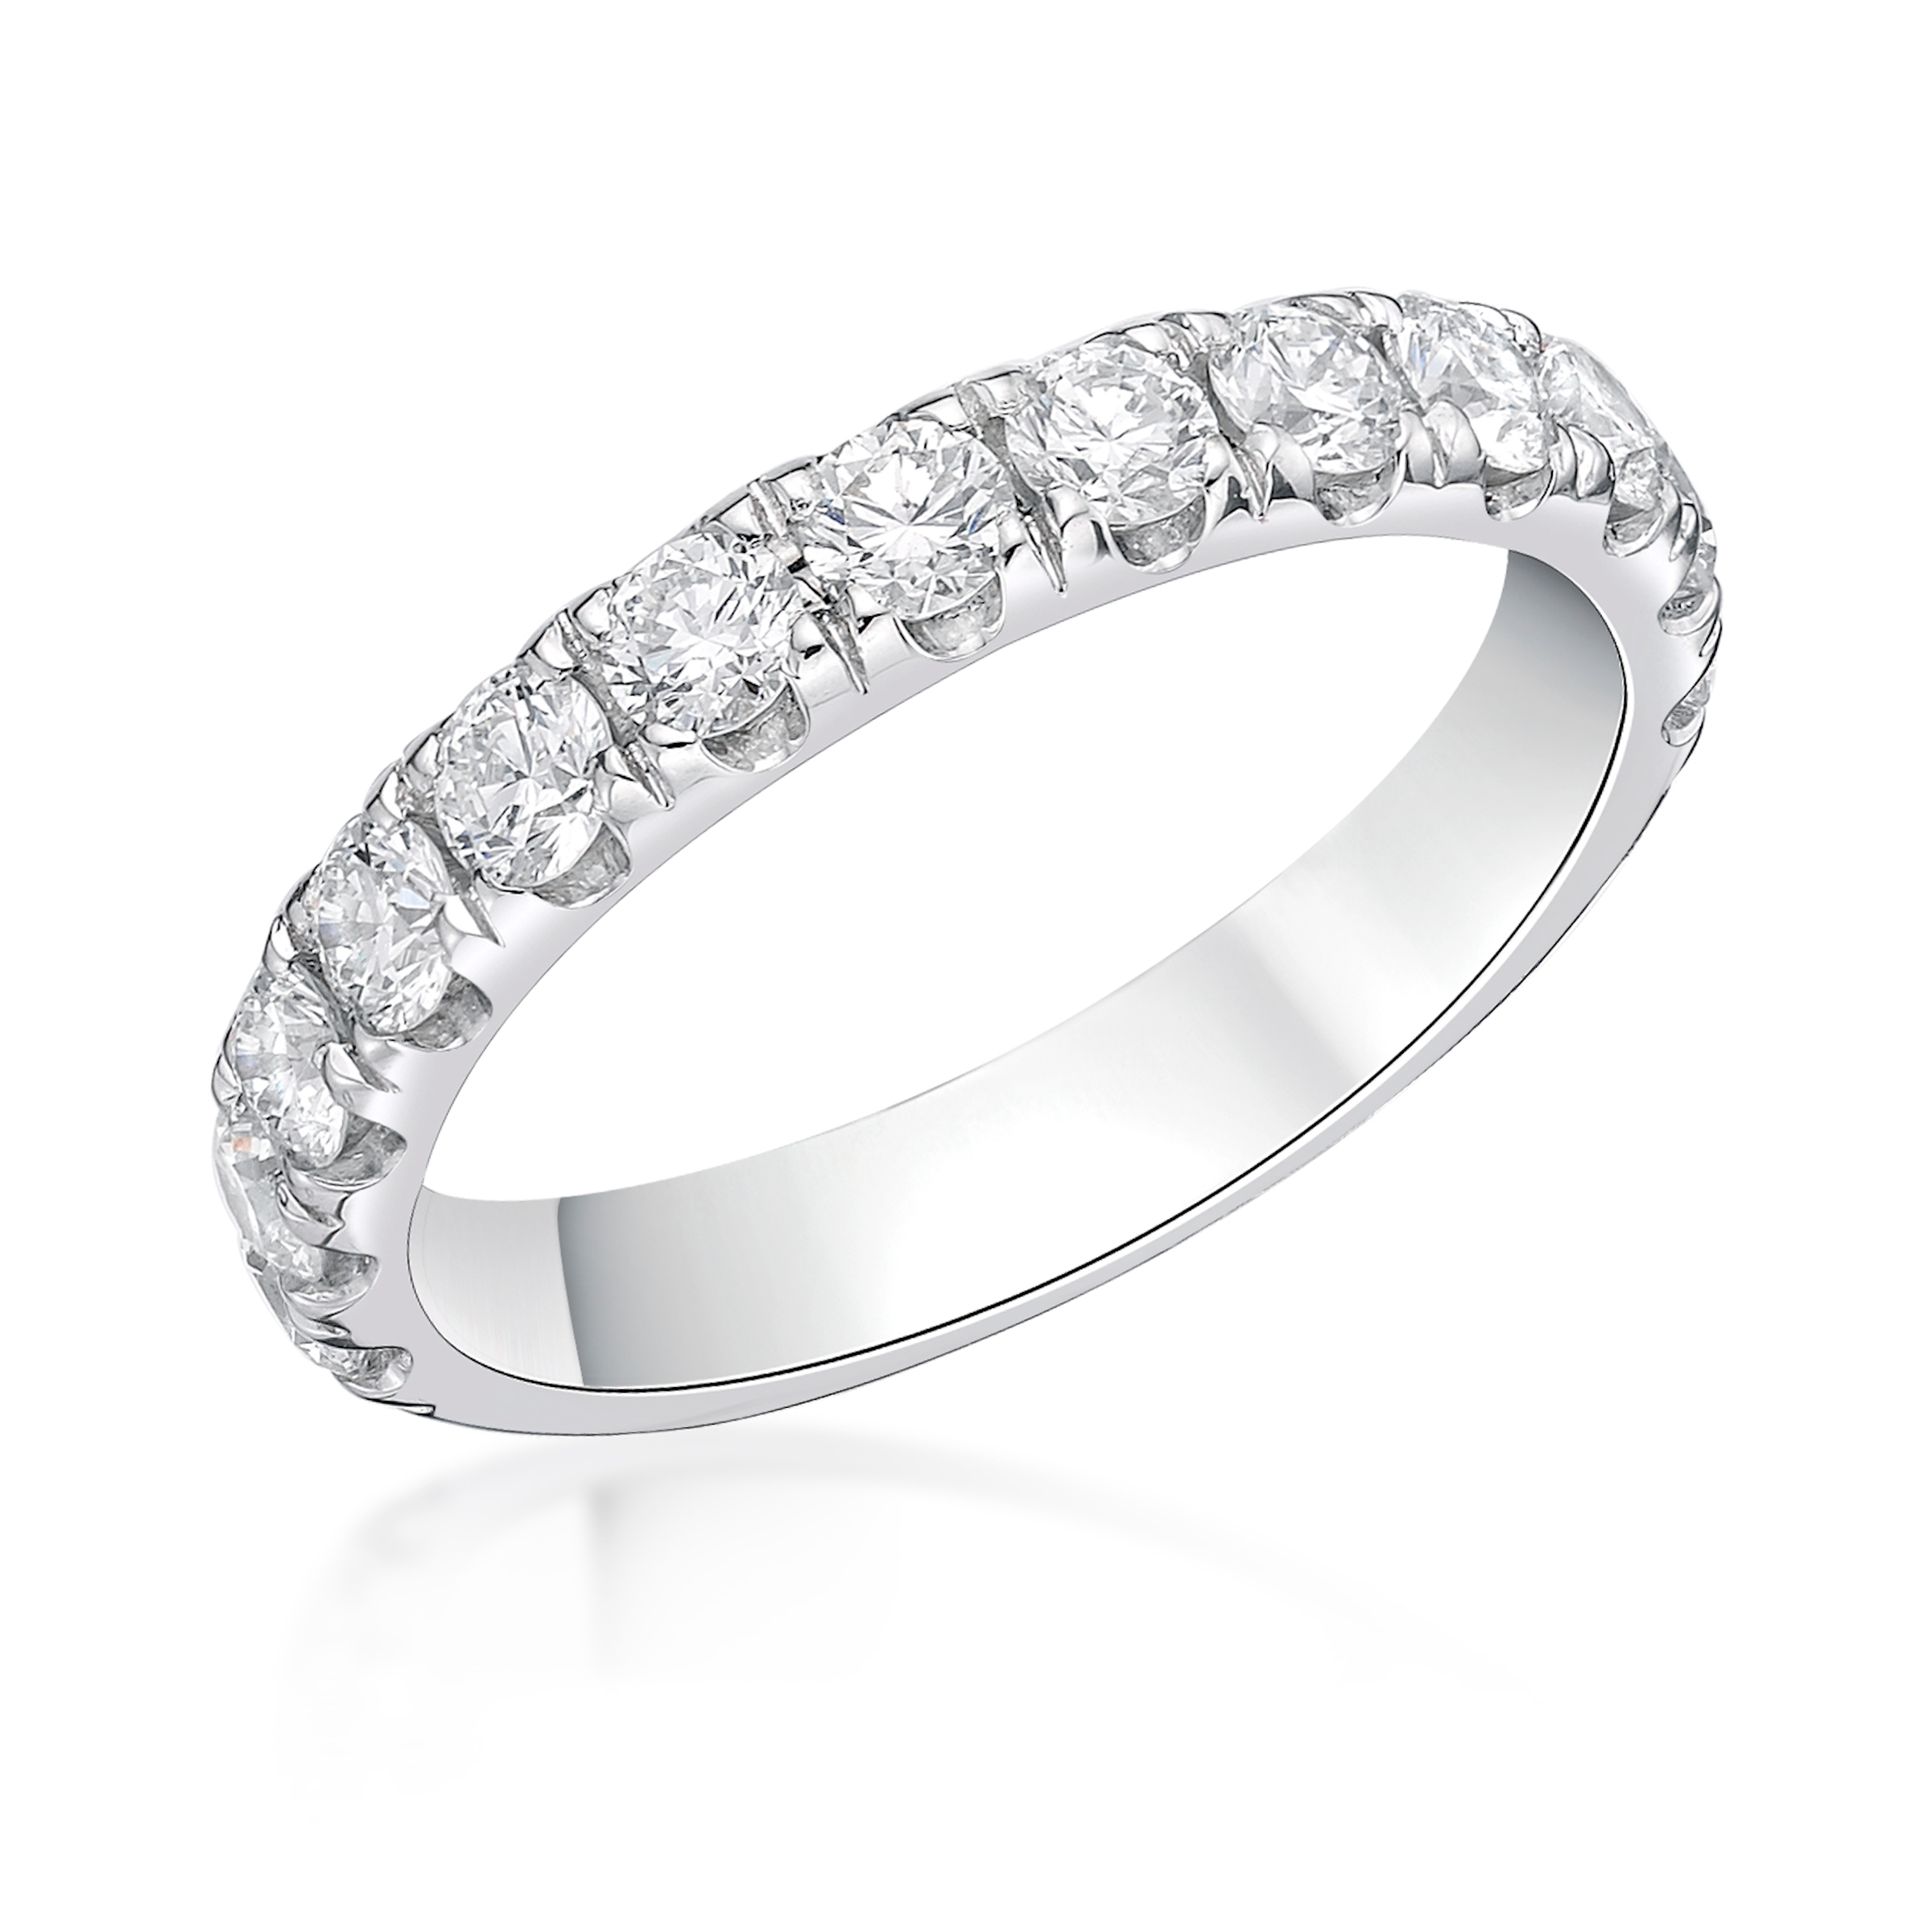 MICRO SET ROUND BRILLIANT DIAMOND WEDDING ETERNITY RING